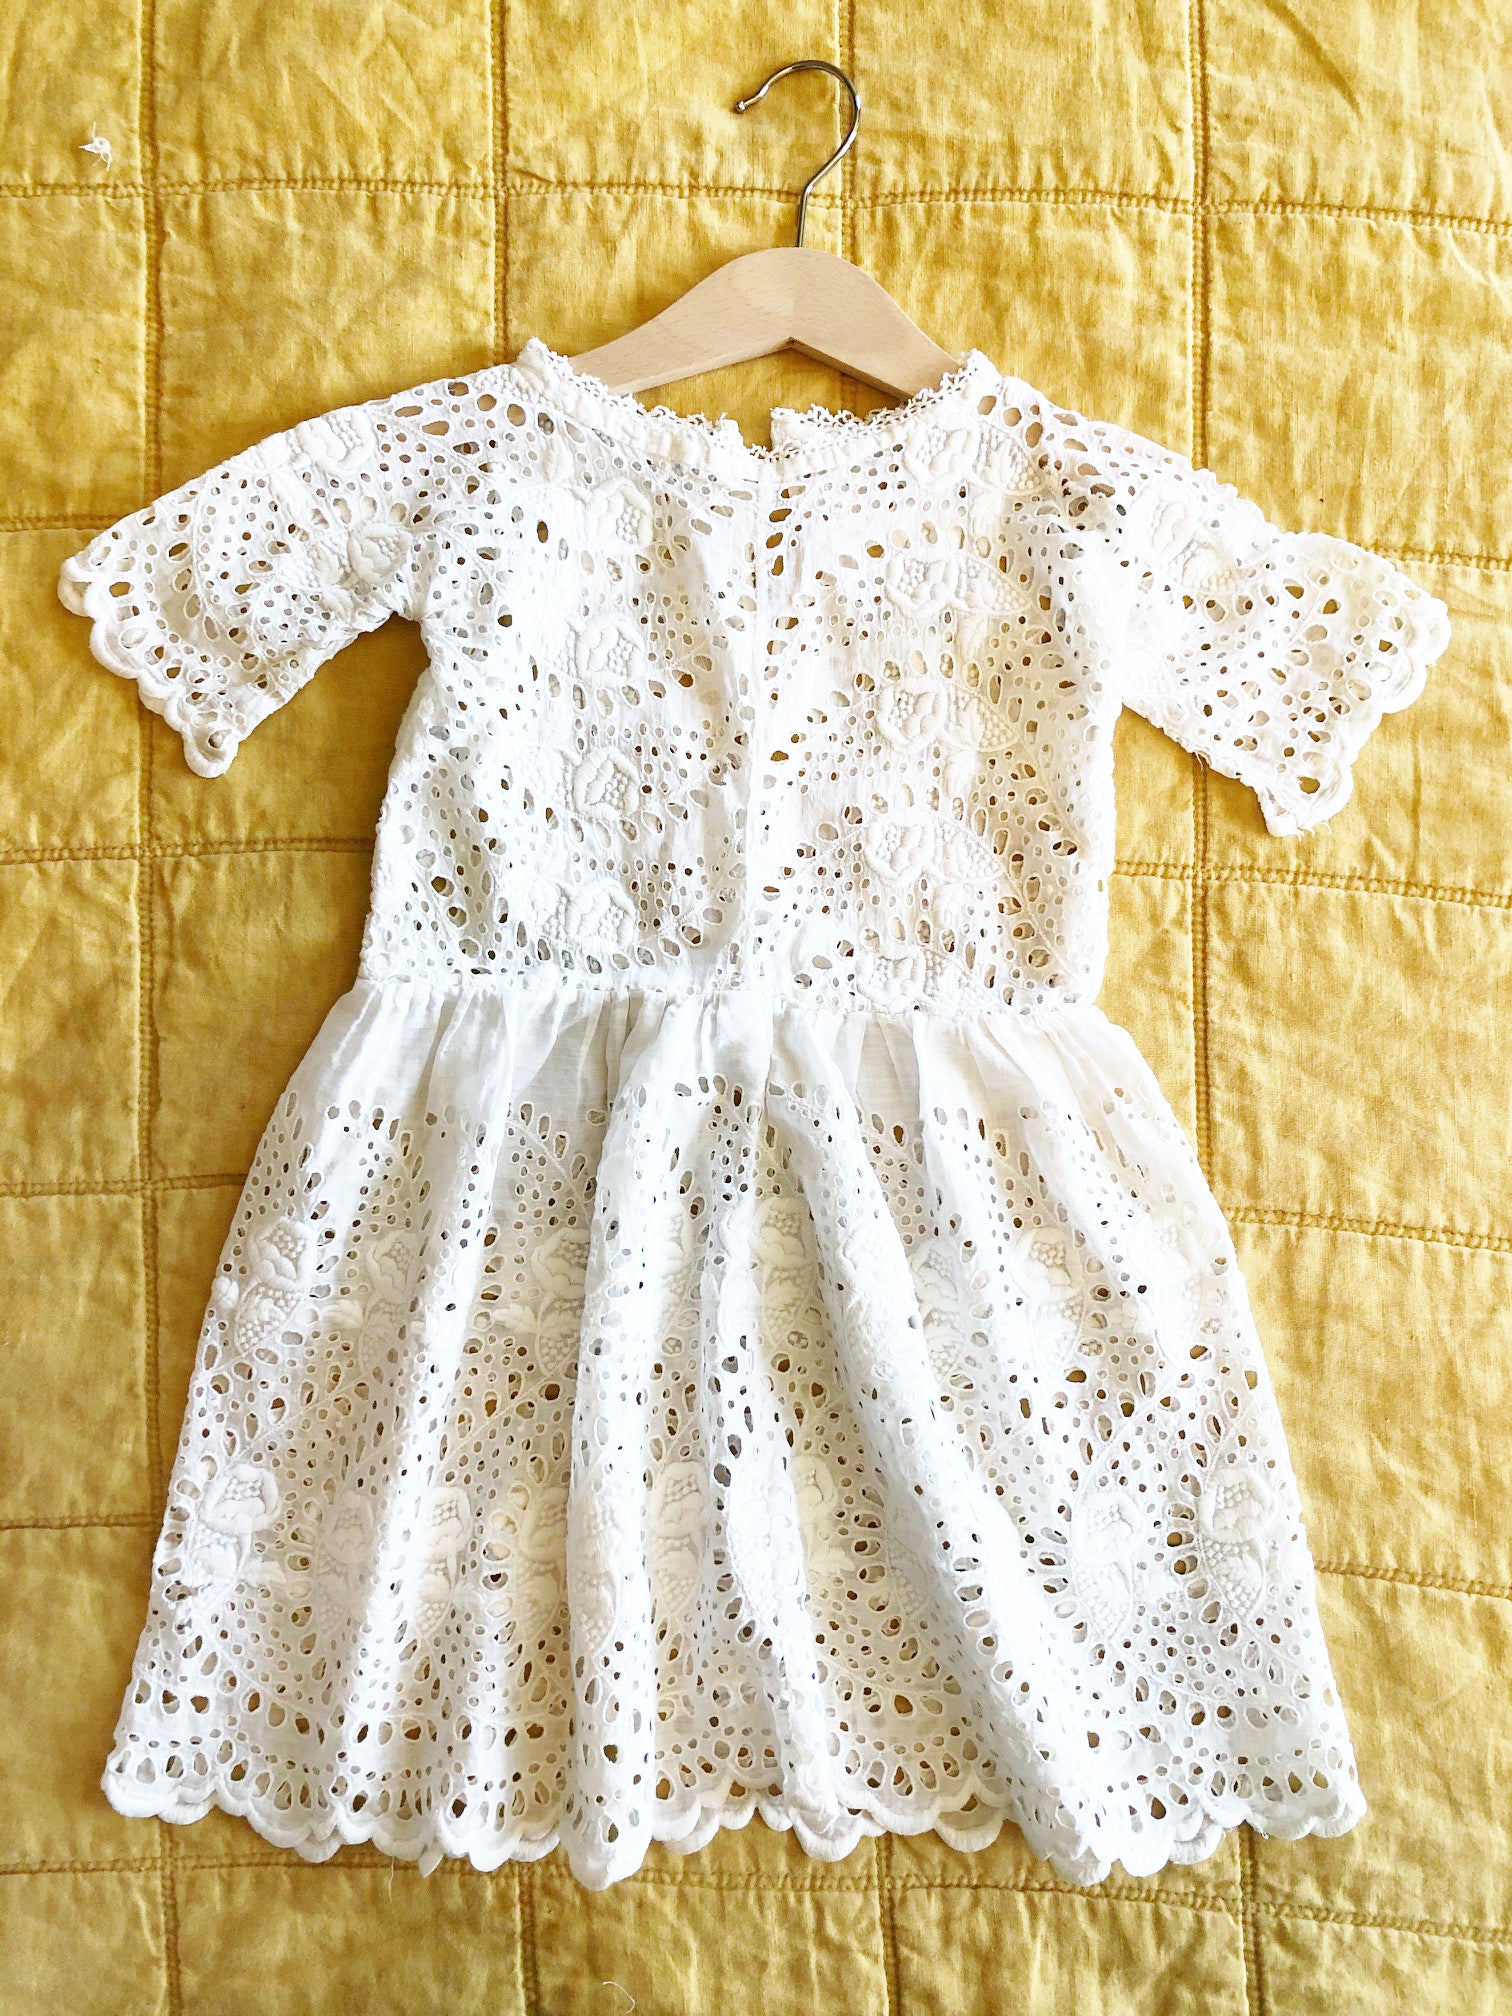 Stunning Victorian Dress with Rose Cutwork Details size 12-18 months